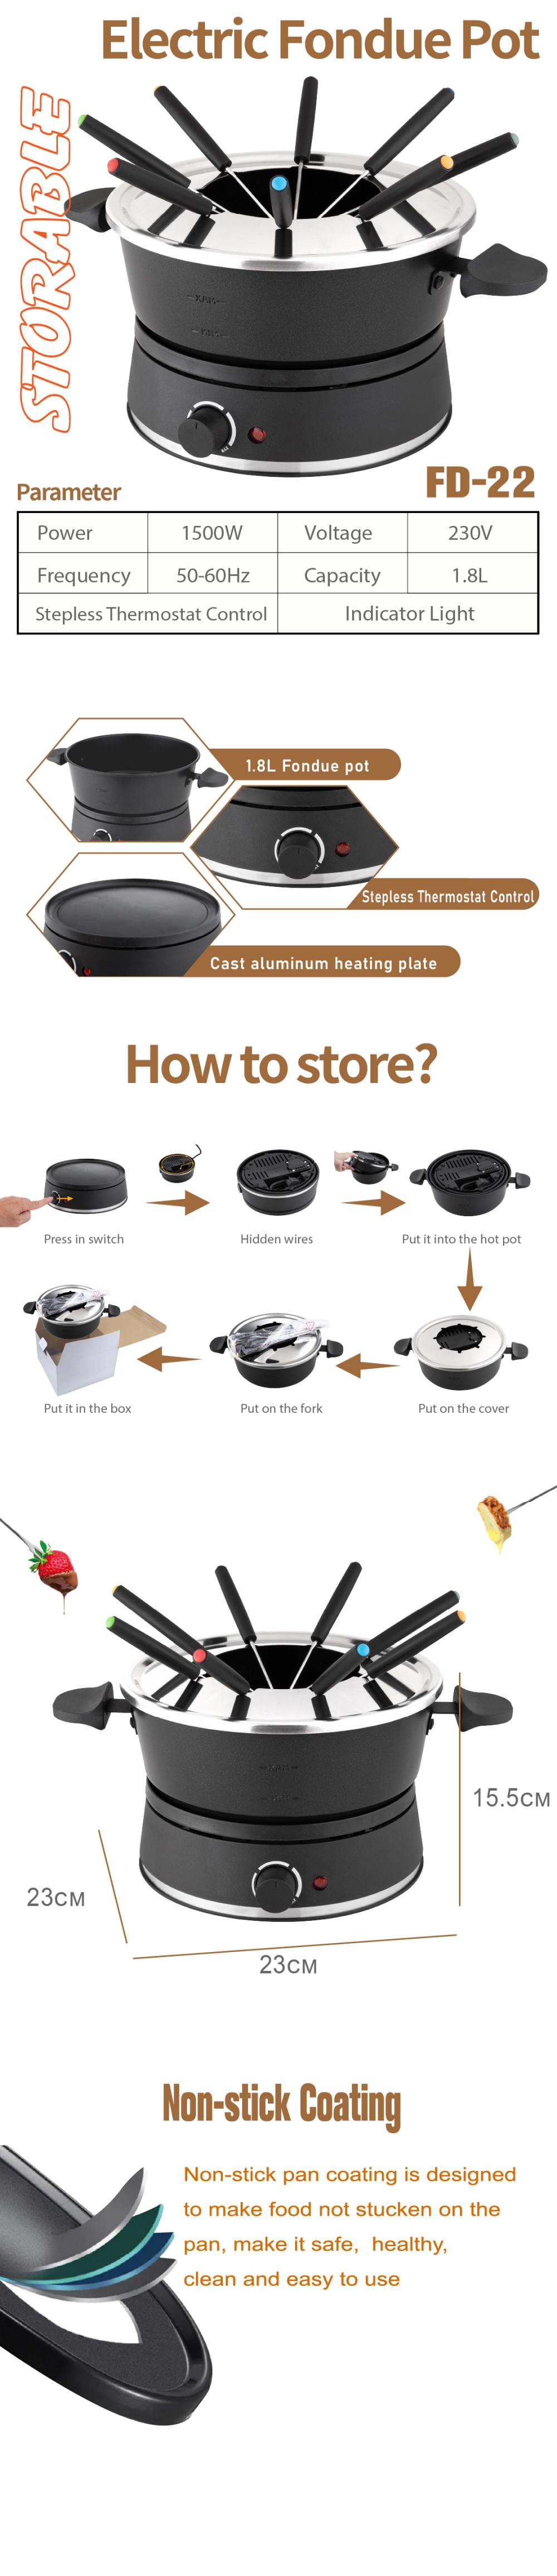 Electric Fondue Pot Hot Pot Can Be Stored